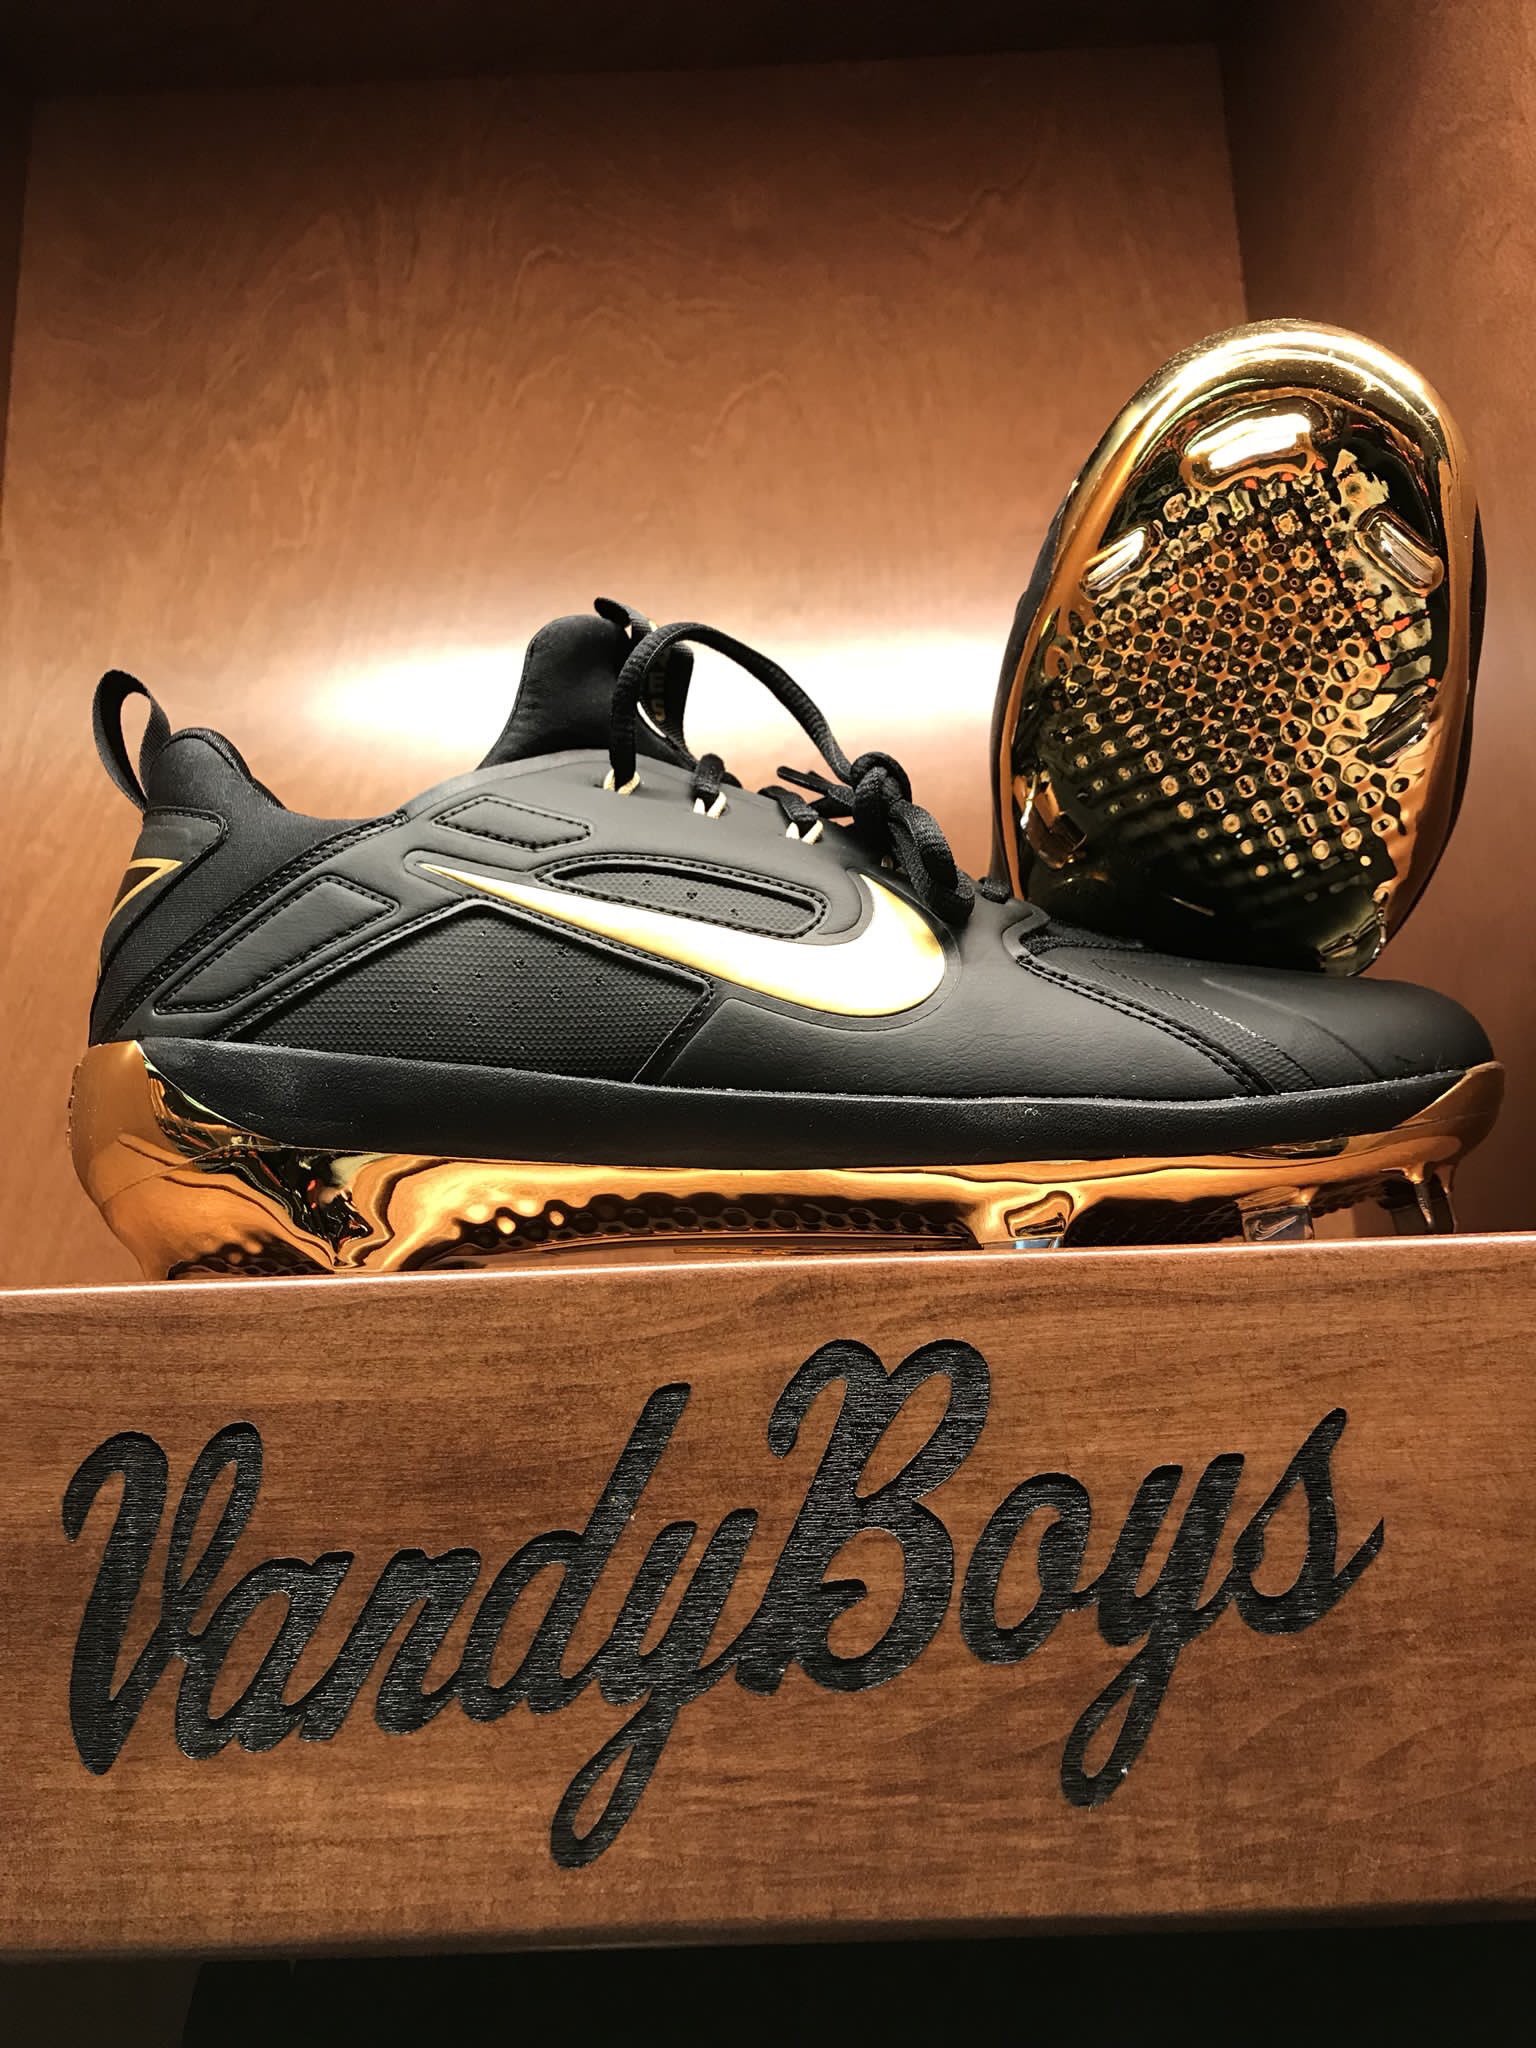 Baseball Bros on X: Vanderbilt will be rockin' these custom Nike cleats  this season 🔥  / X